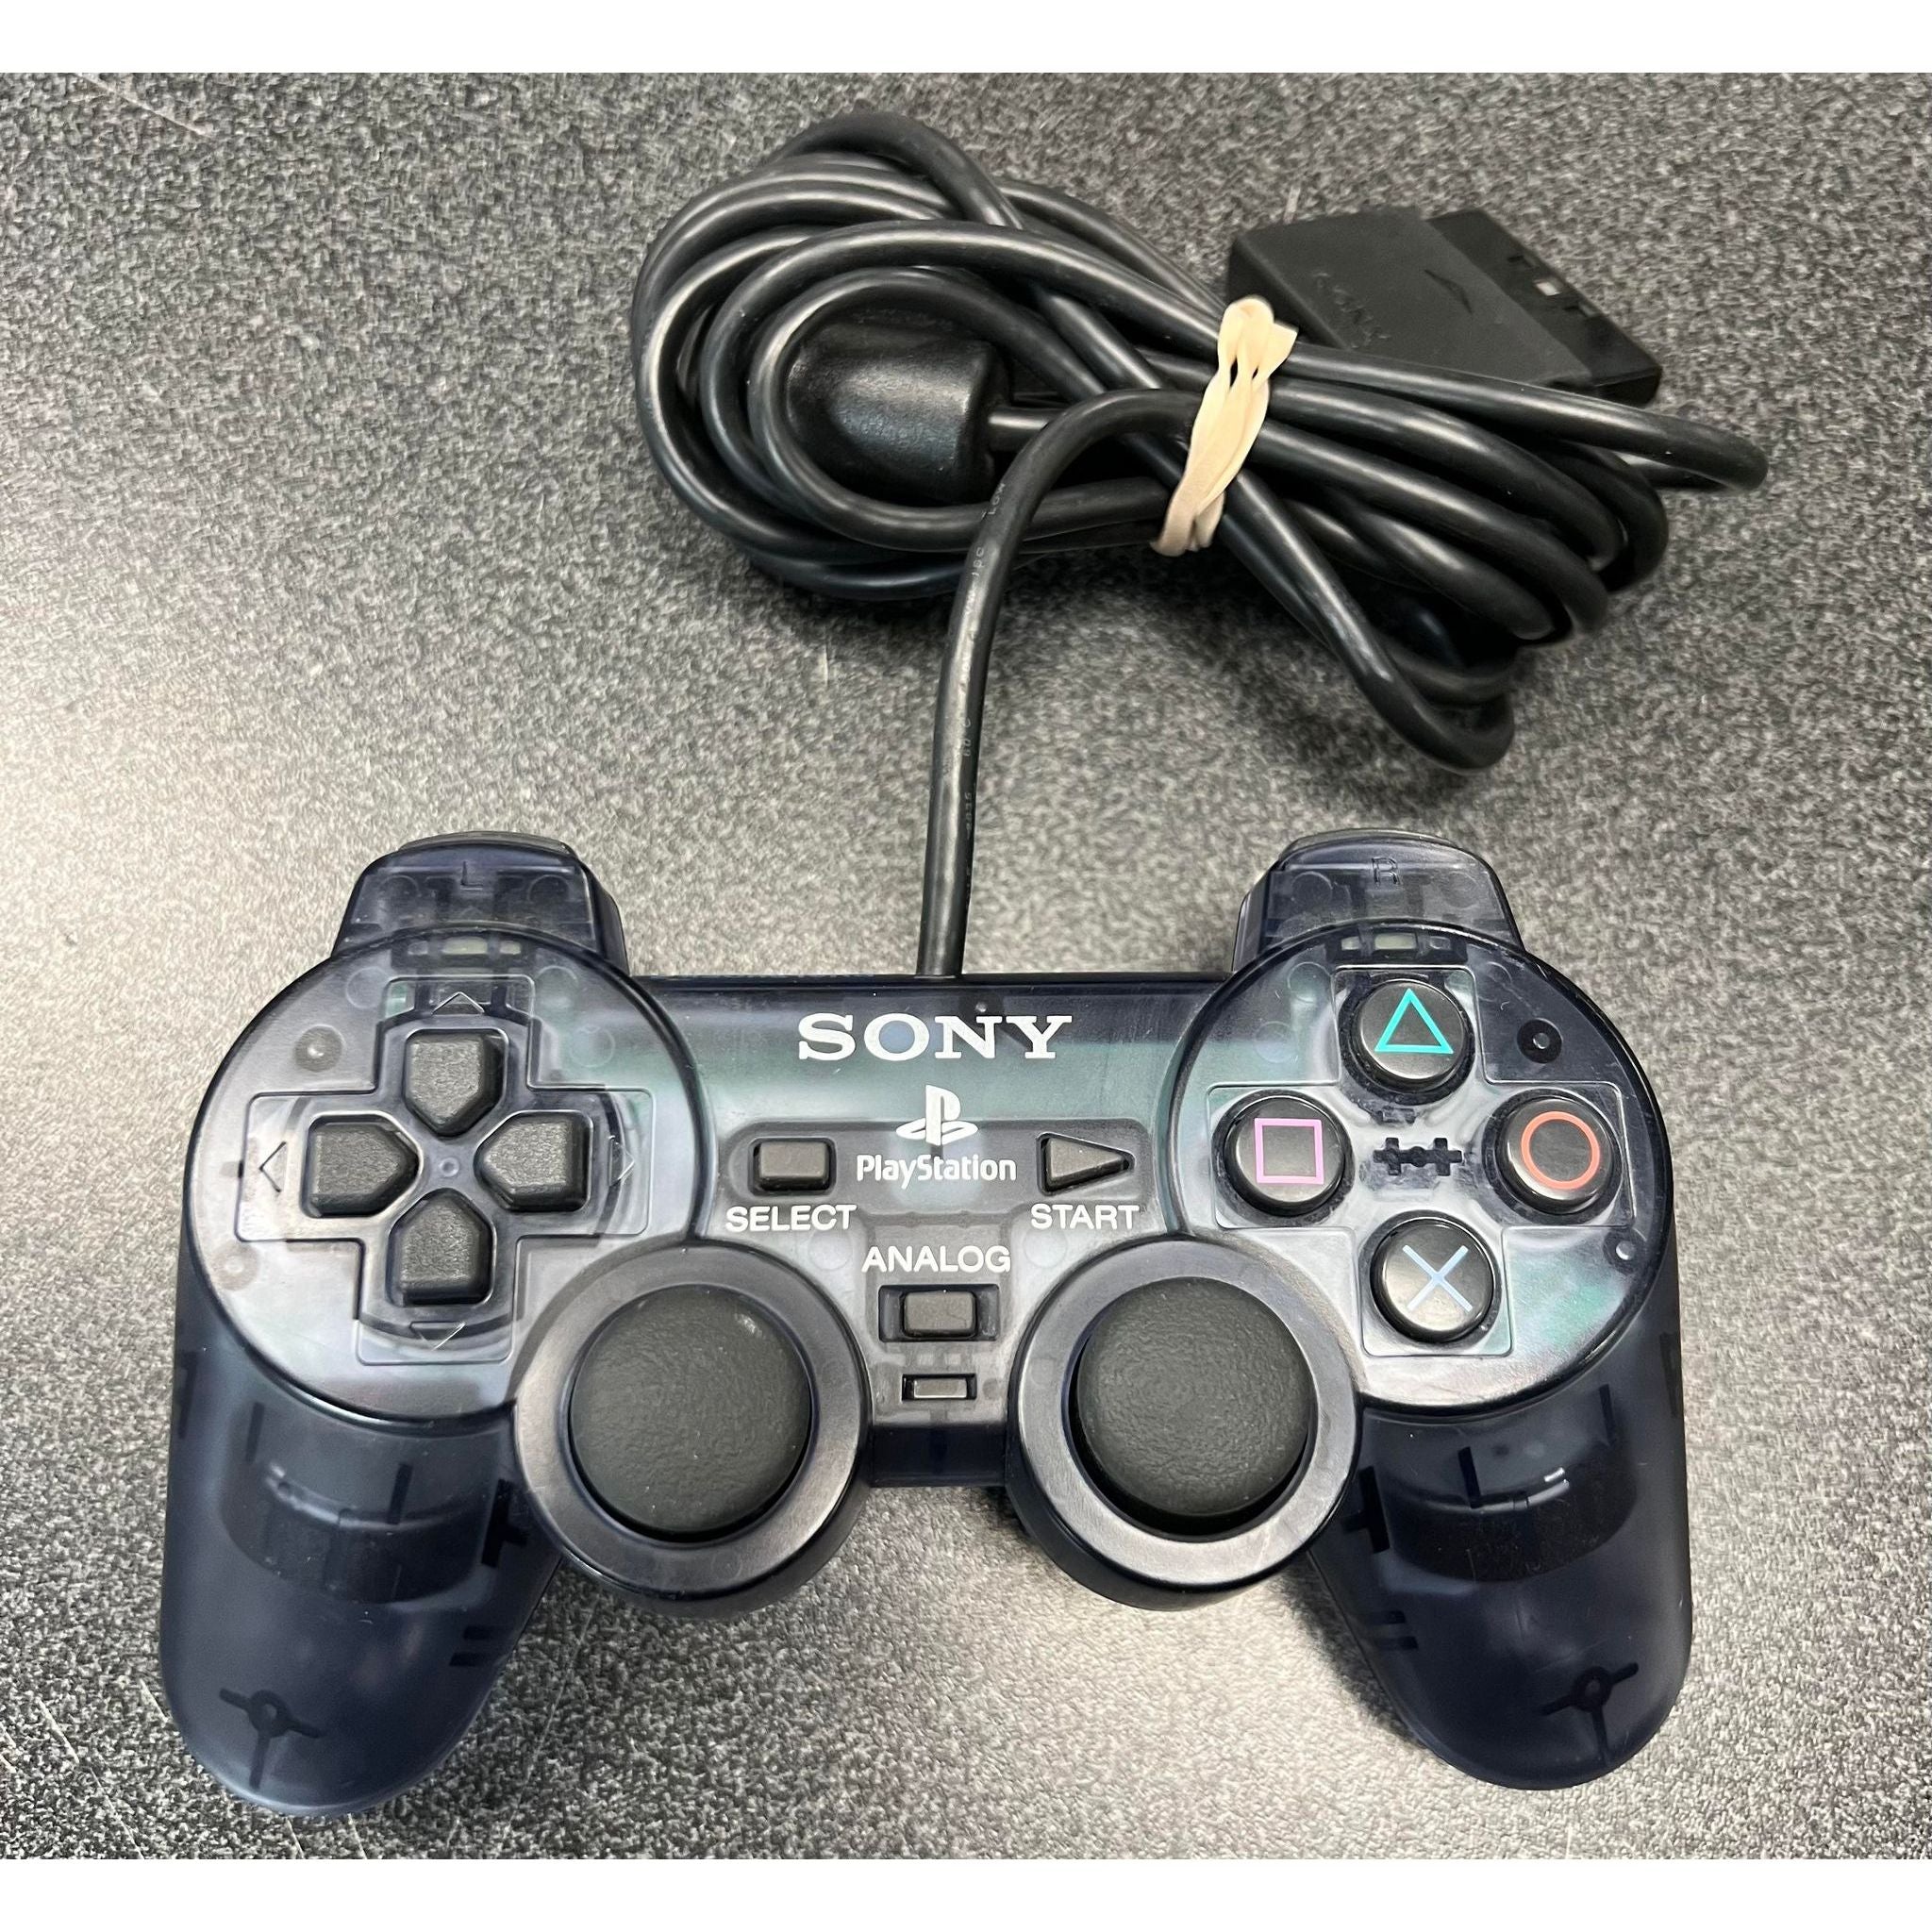 Sony Branded PlayStation 2 DualShock Controller (Smoke)